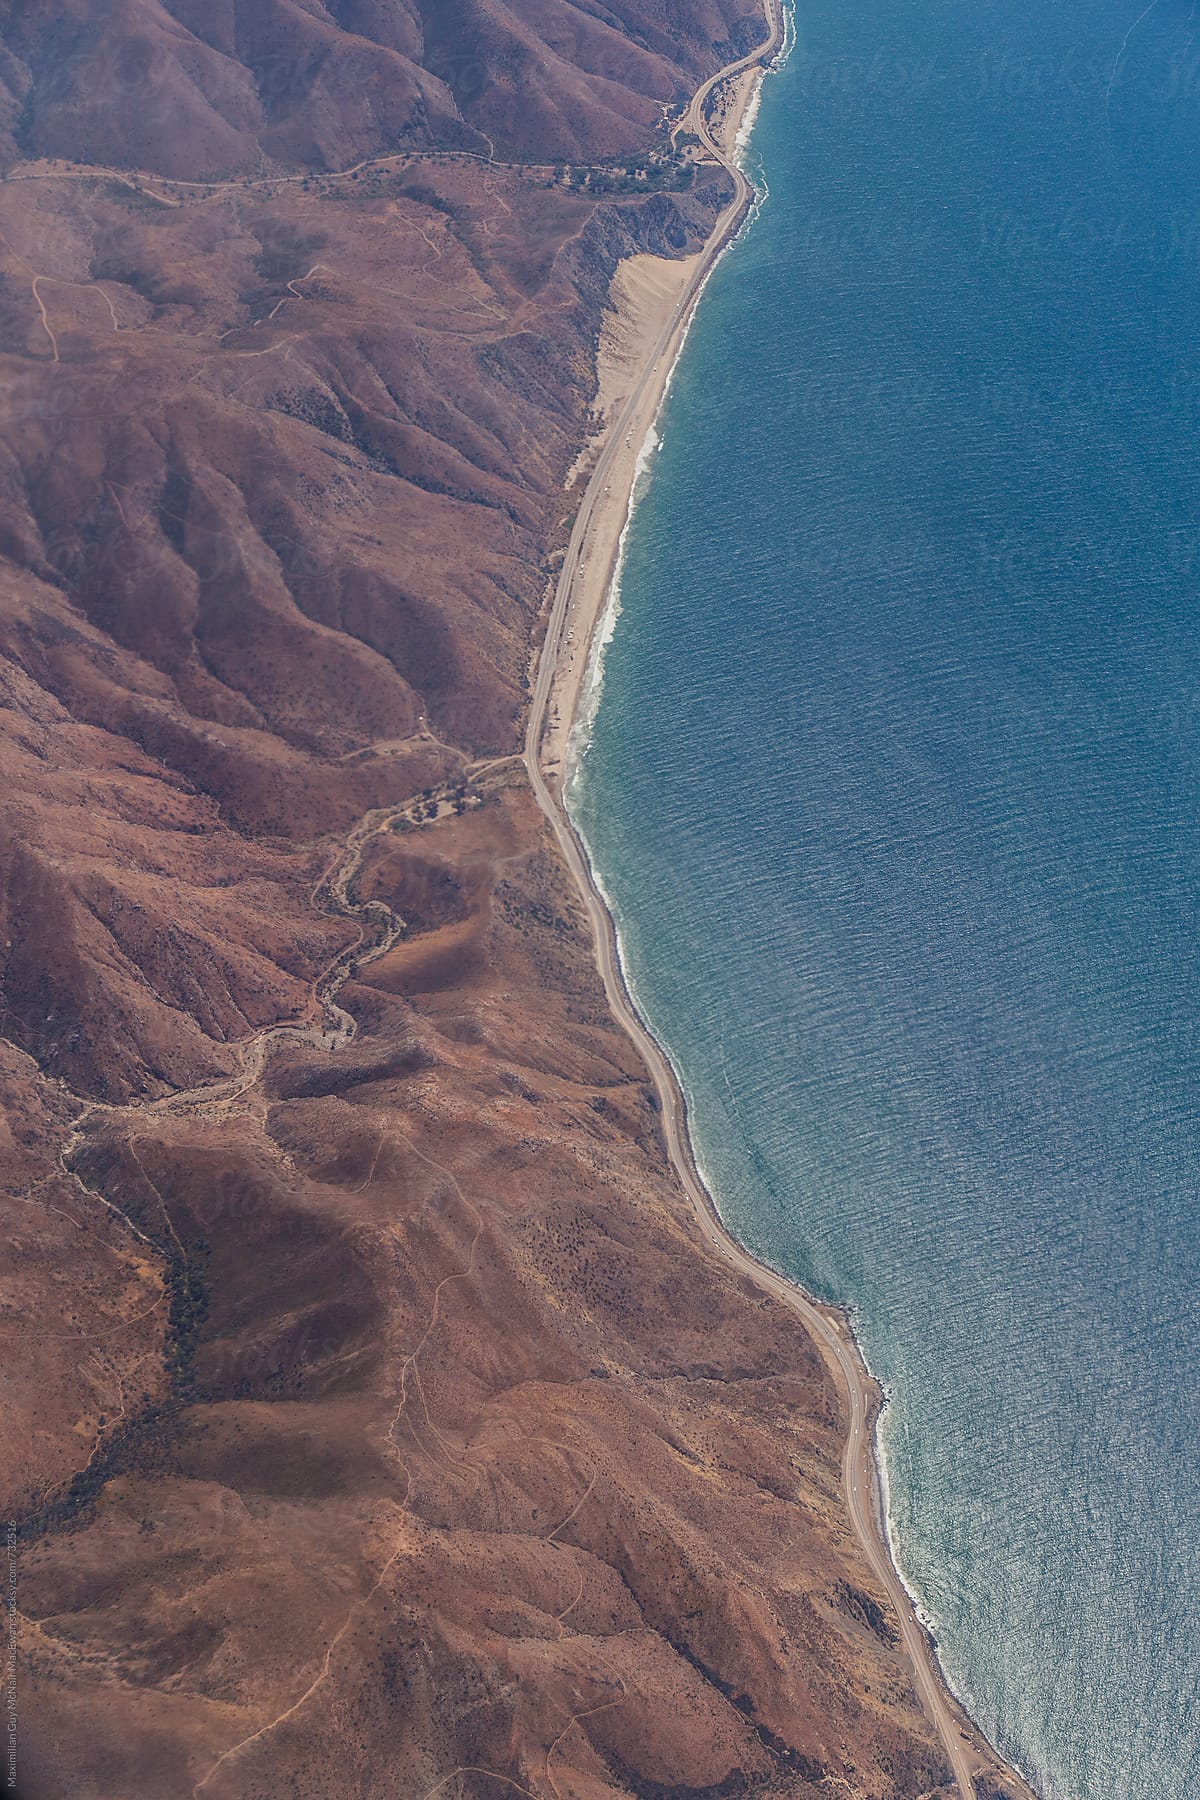 The California coastline